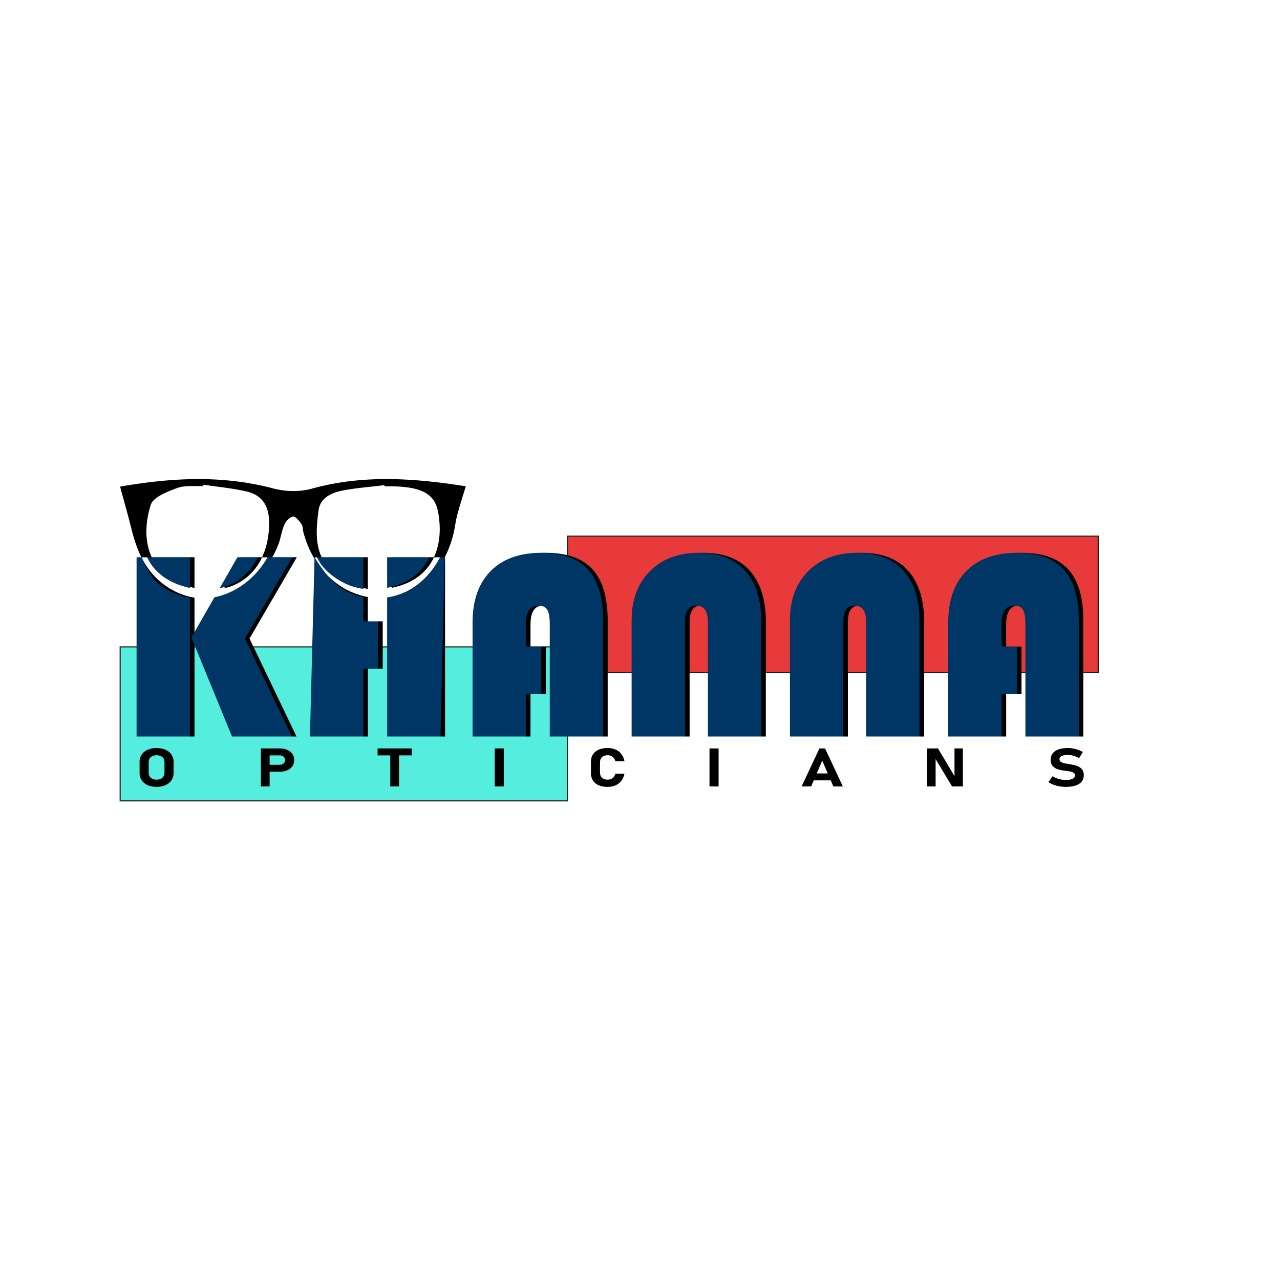 Khanna Opticians